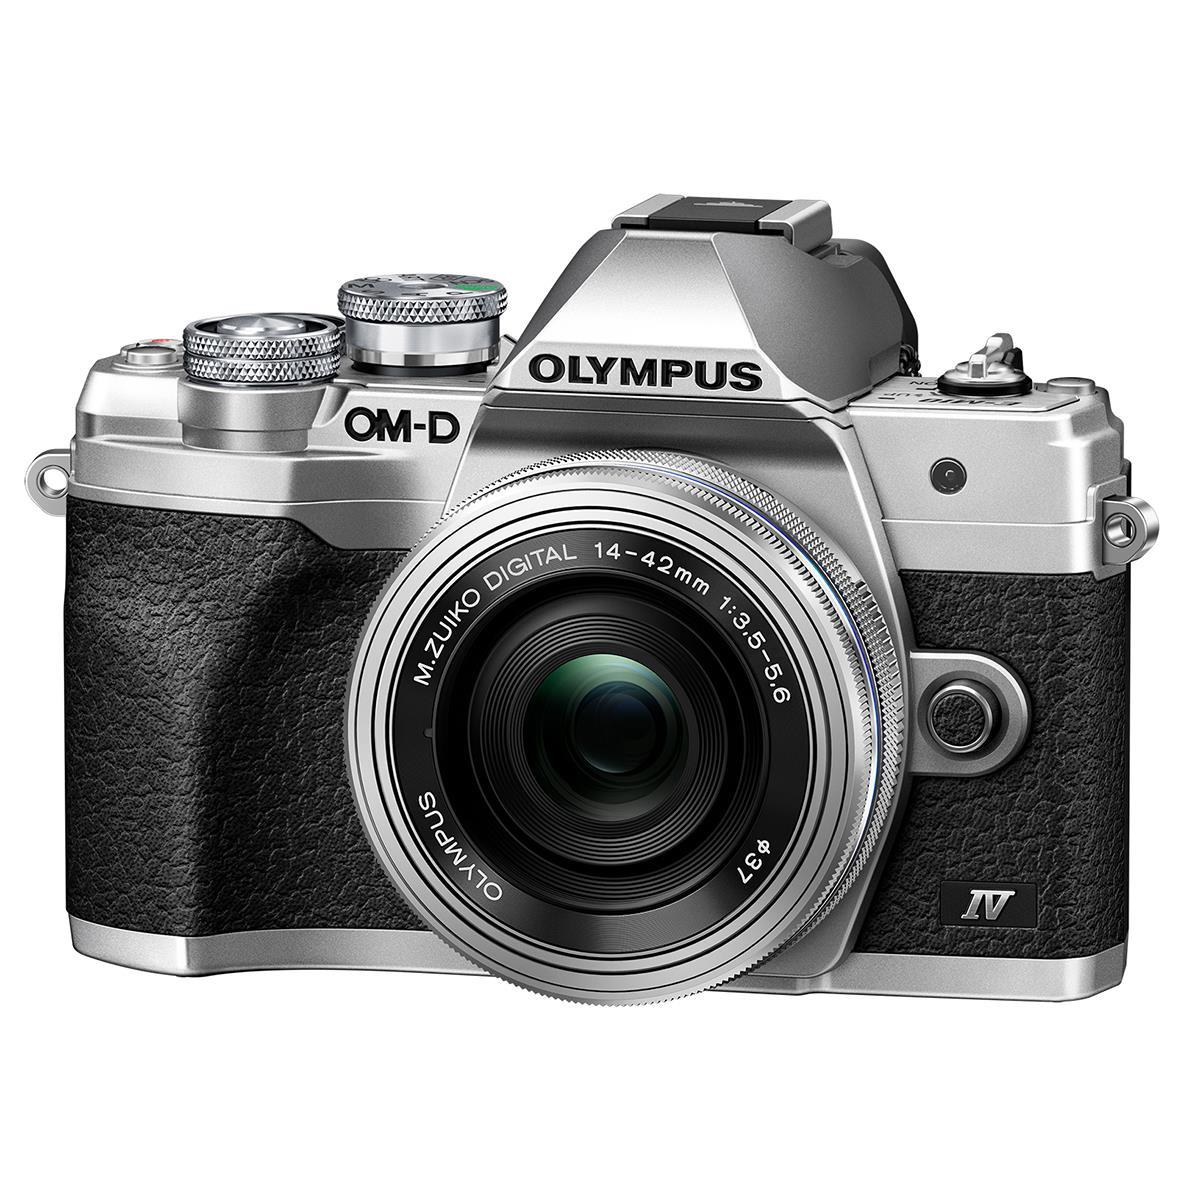 Image of Olympus OM-D E-M10 Mark IV Camera with ED 14-42mm F3.5-5.6 EZ Lens